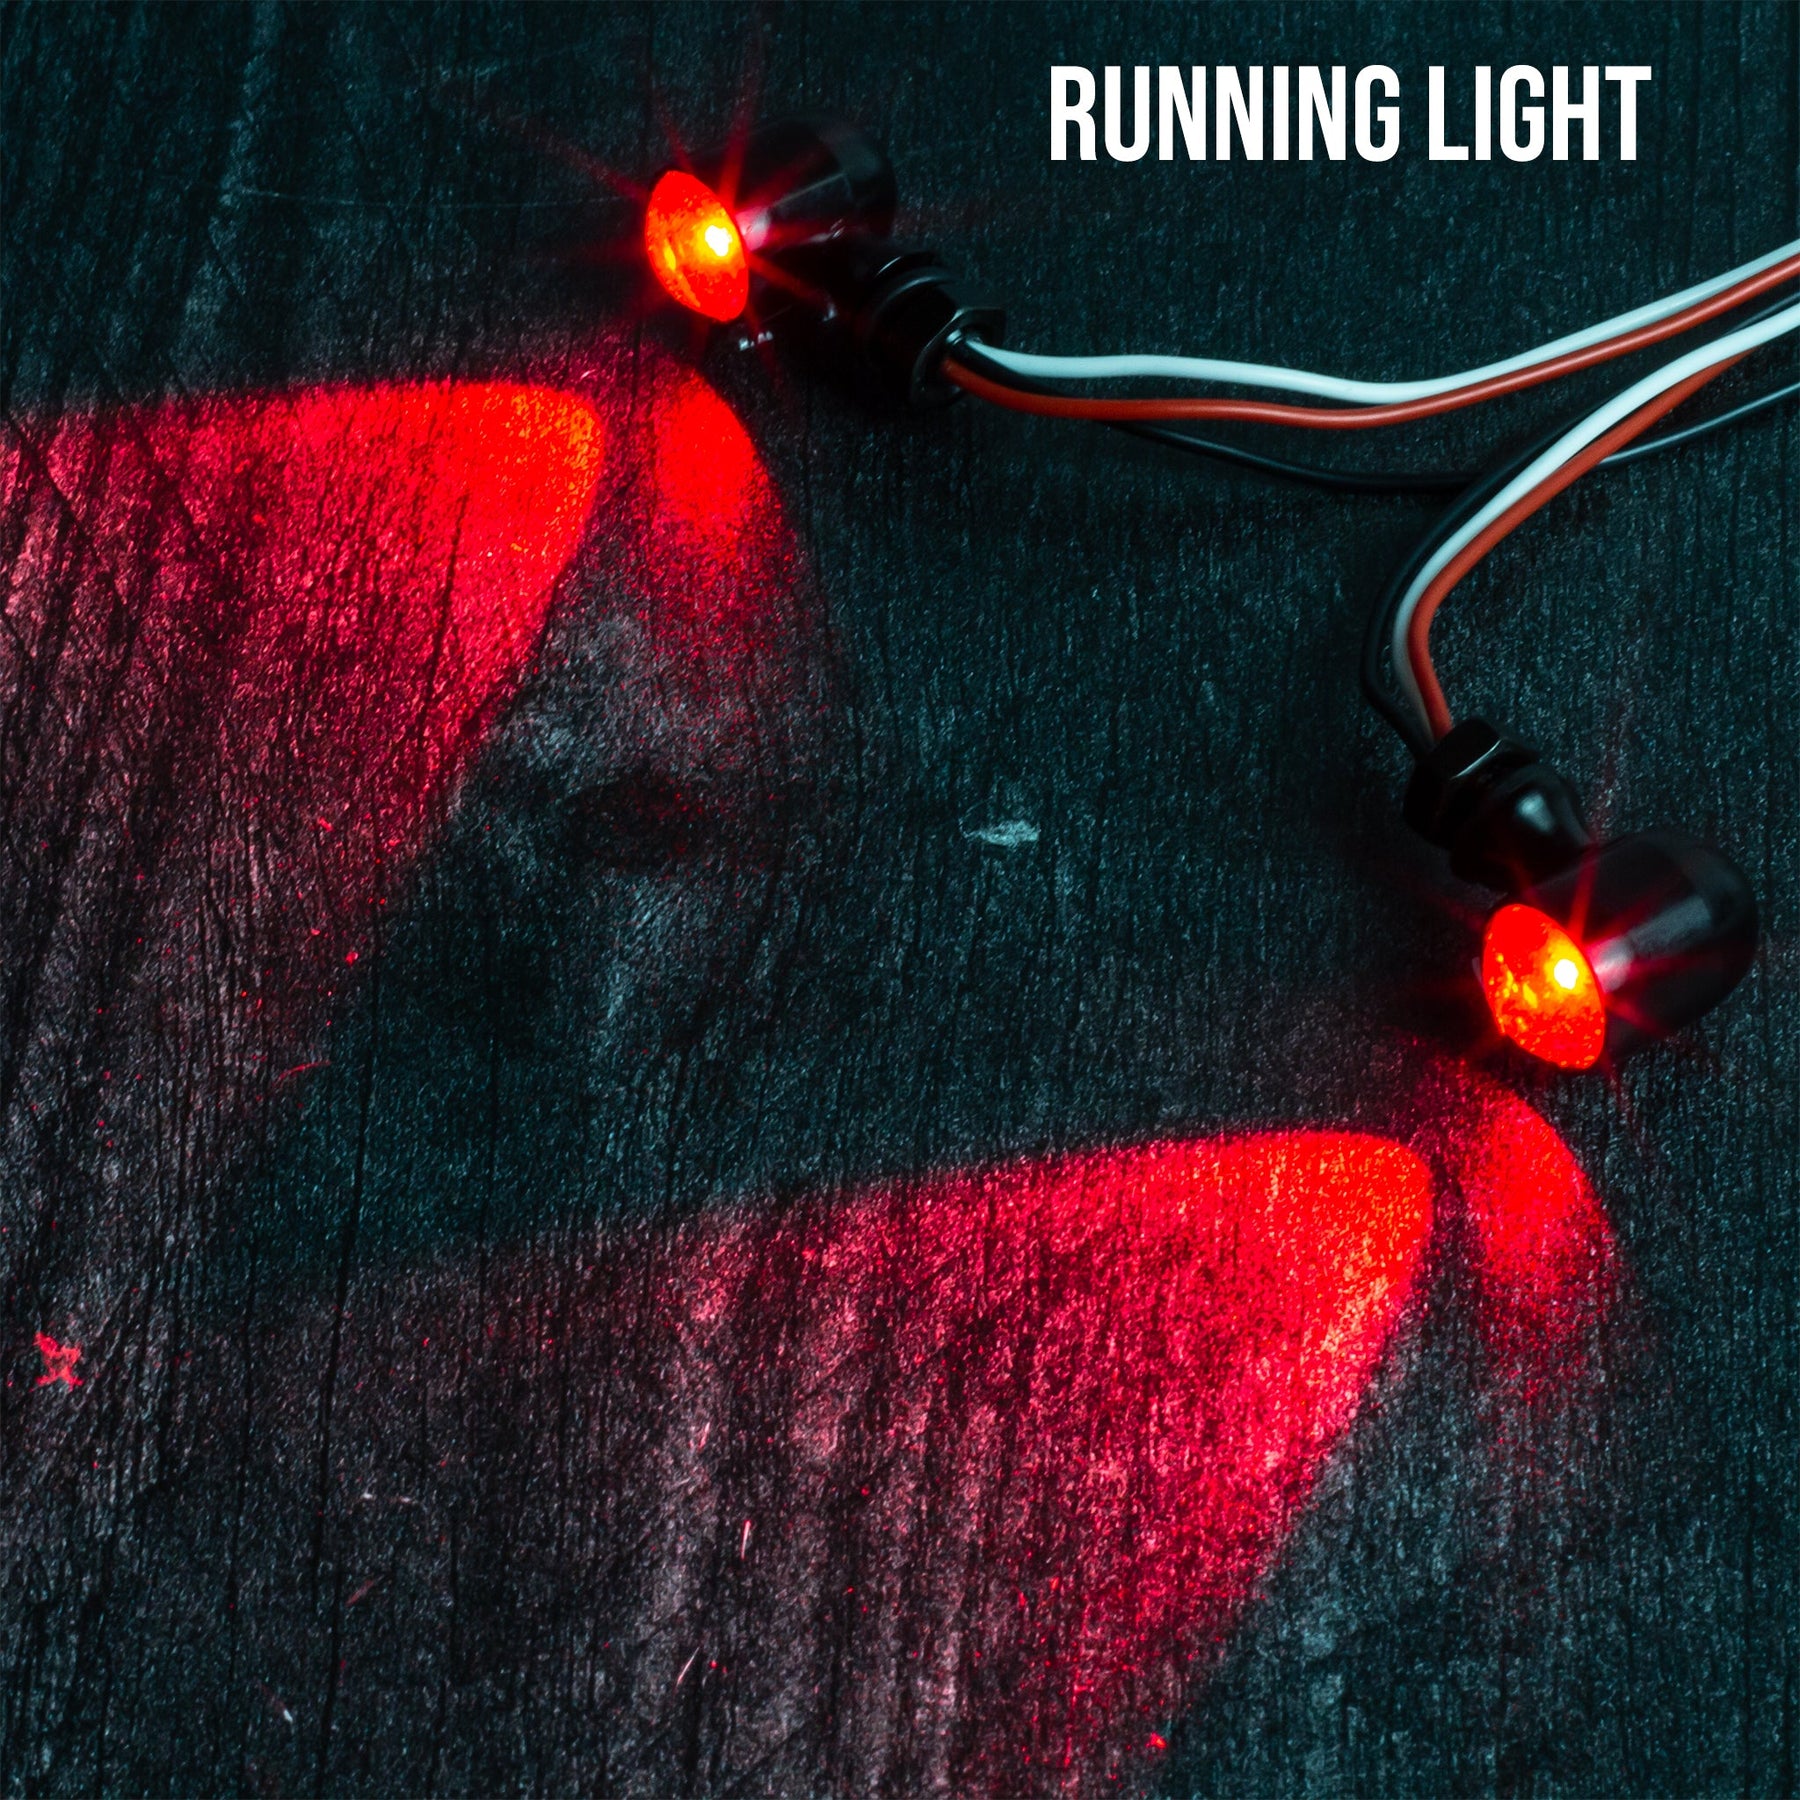 LED Running Lights